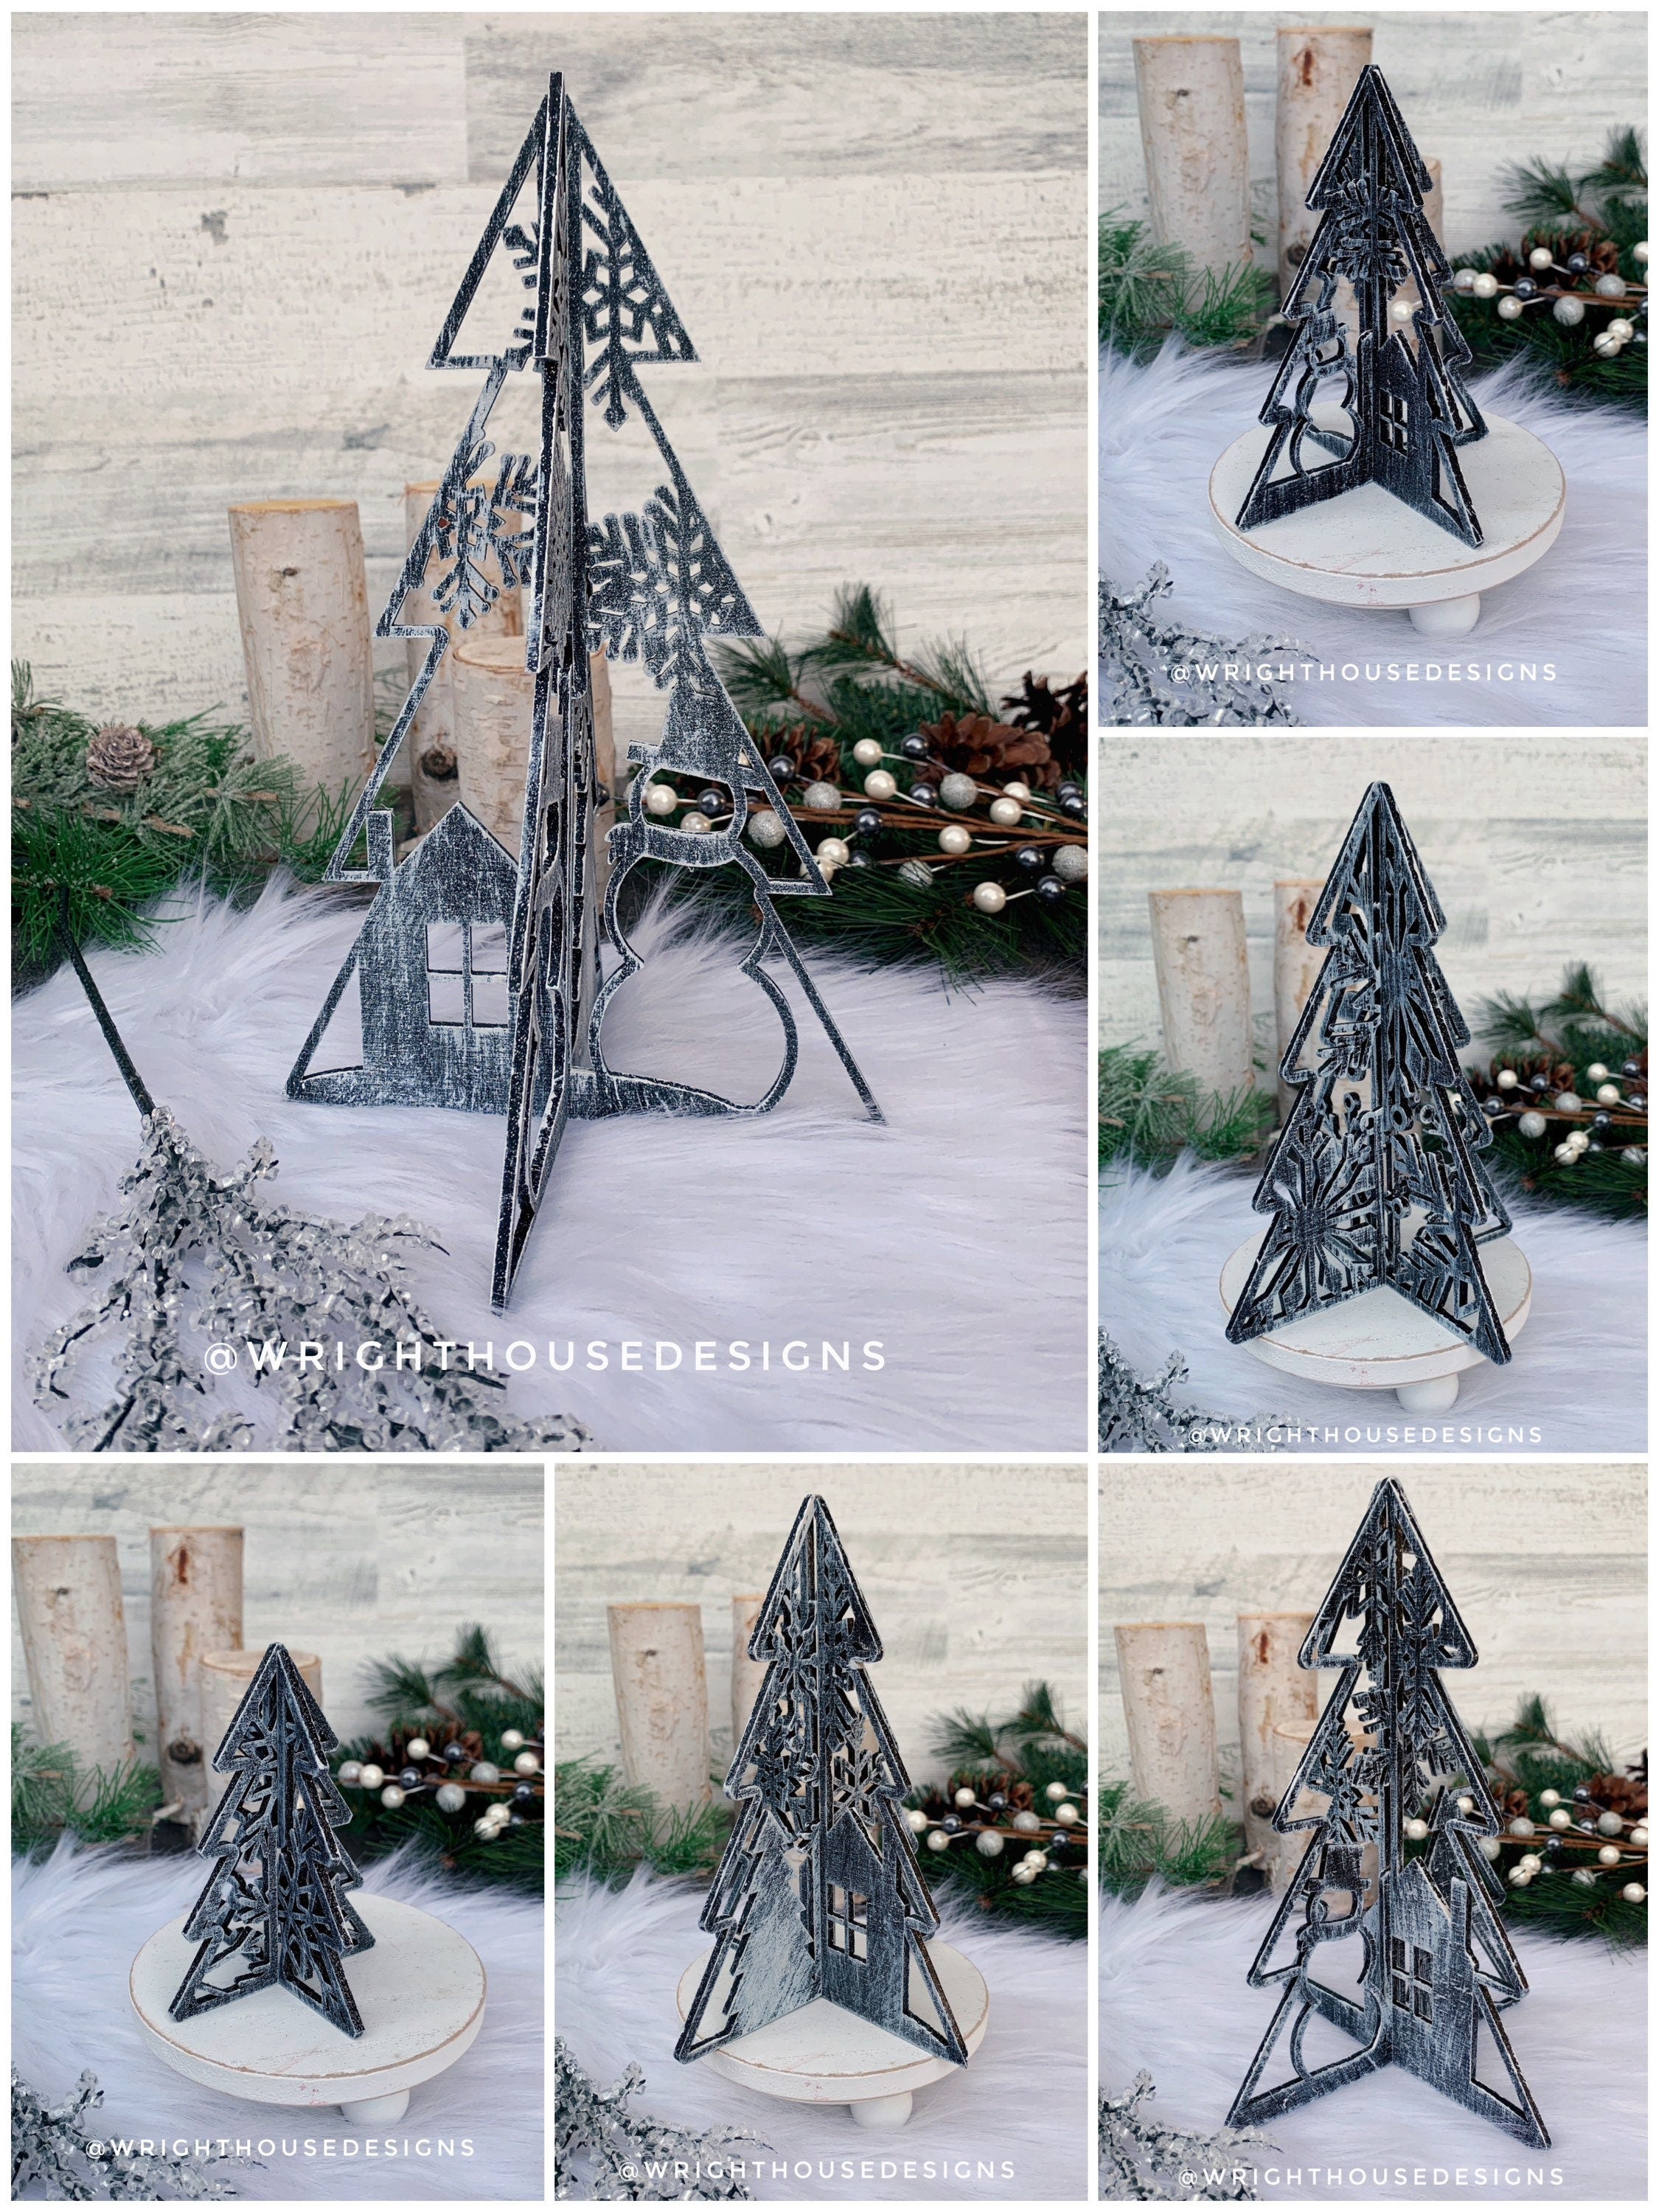 Winter Snowman - 3D Interlocking Christmas Trees - Rustic Farmhouse - Laser Cut Wooden Holiday Decor - Fireplace Mantle - Shelf Sitters